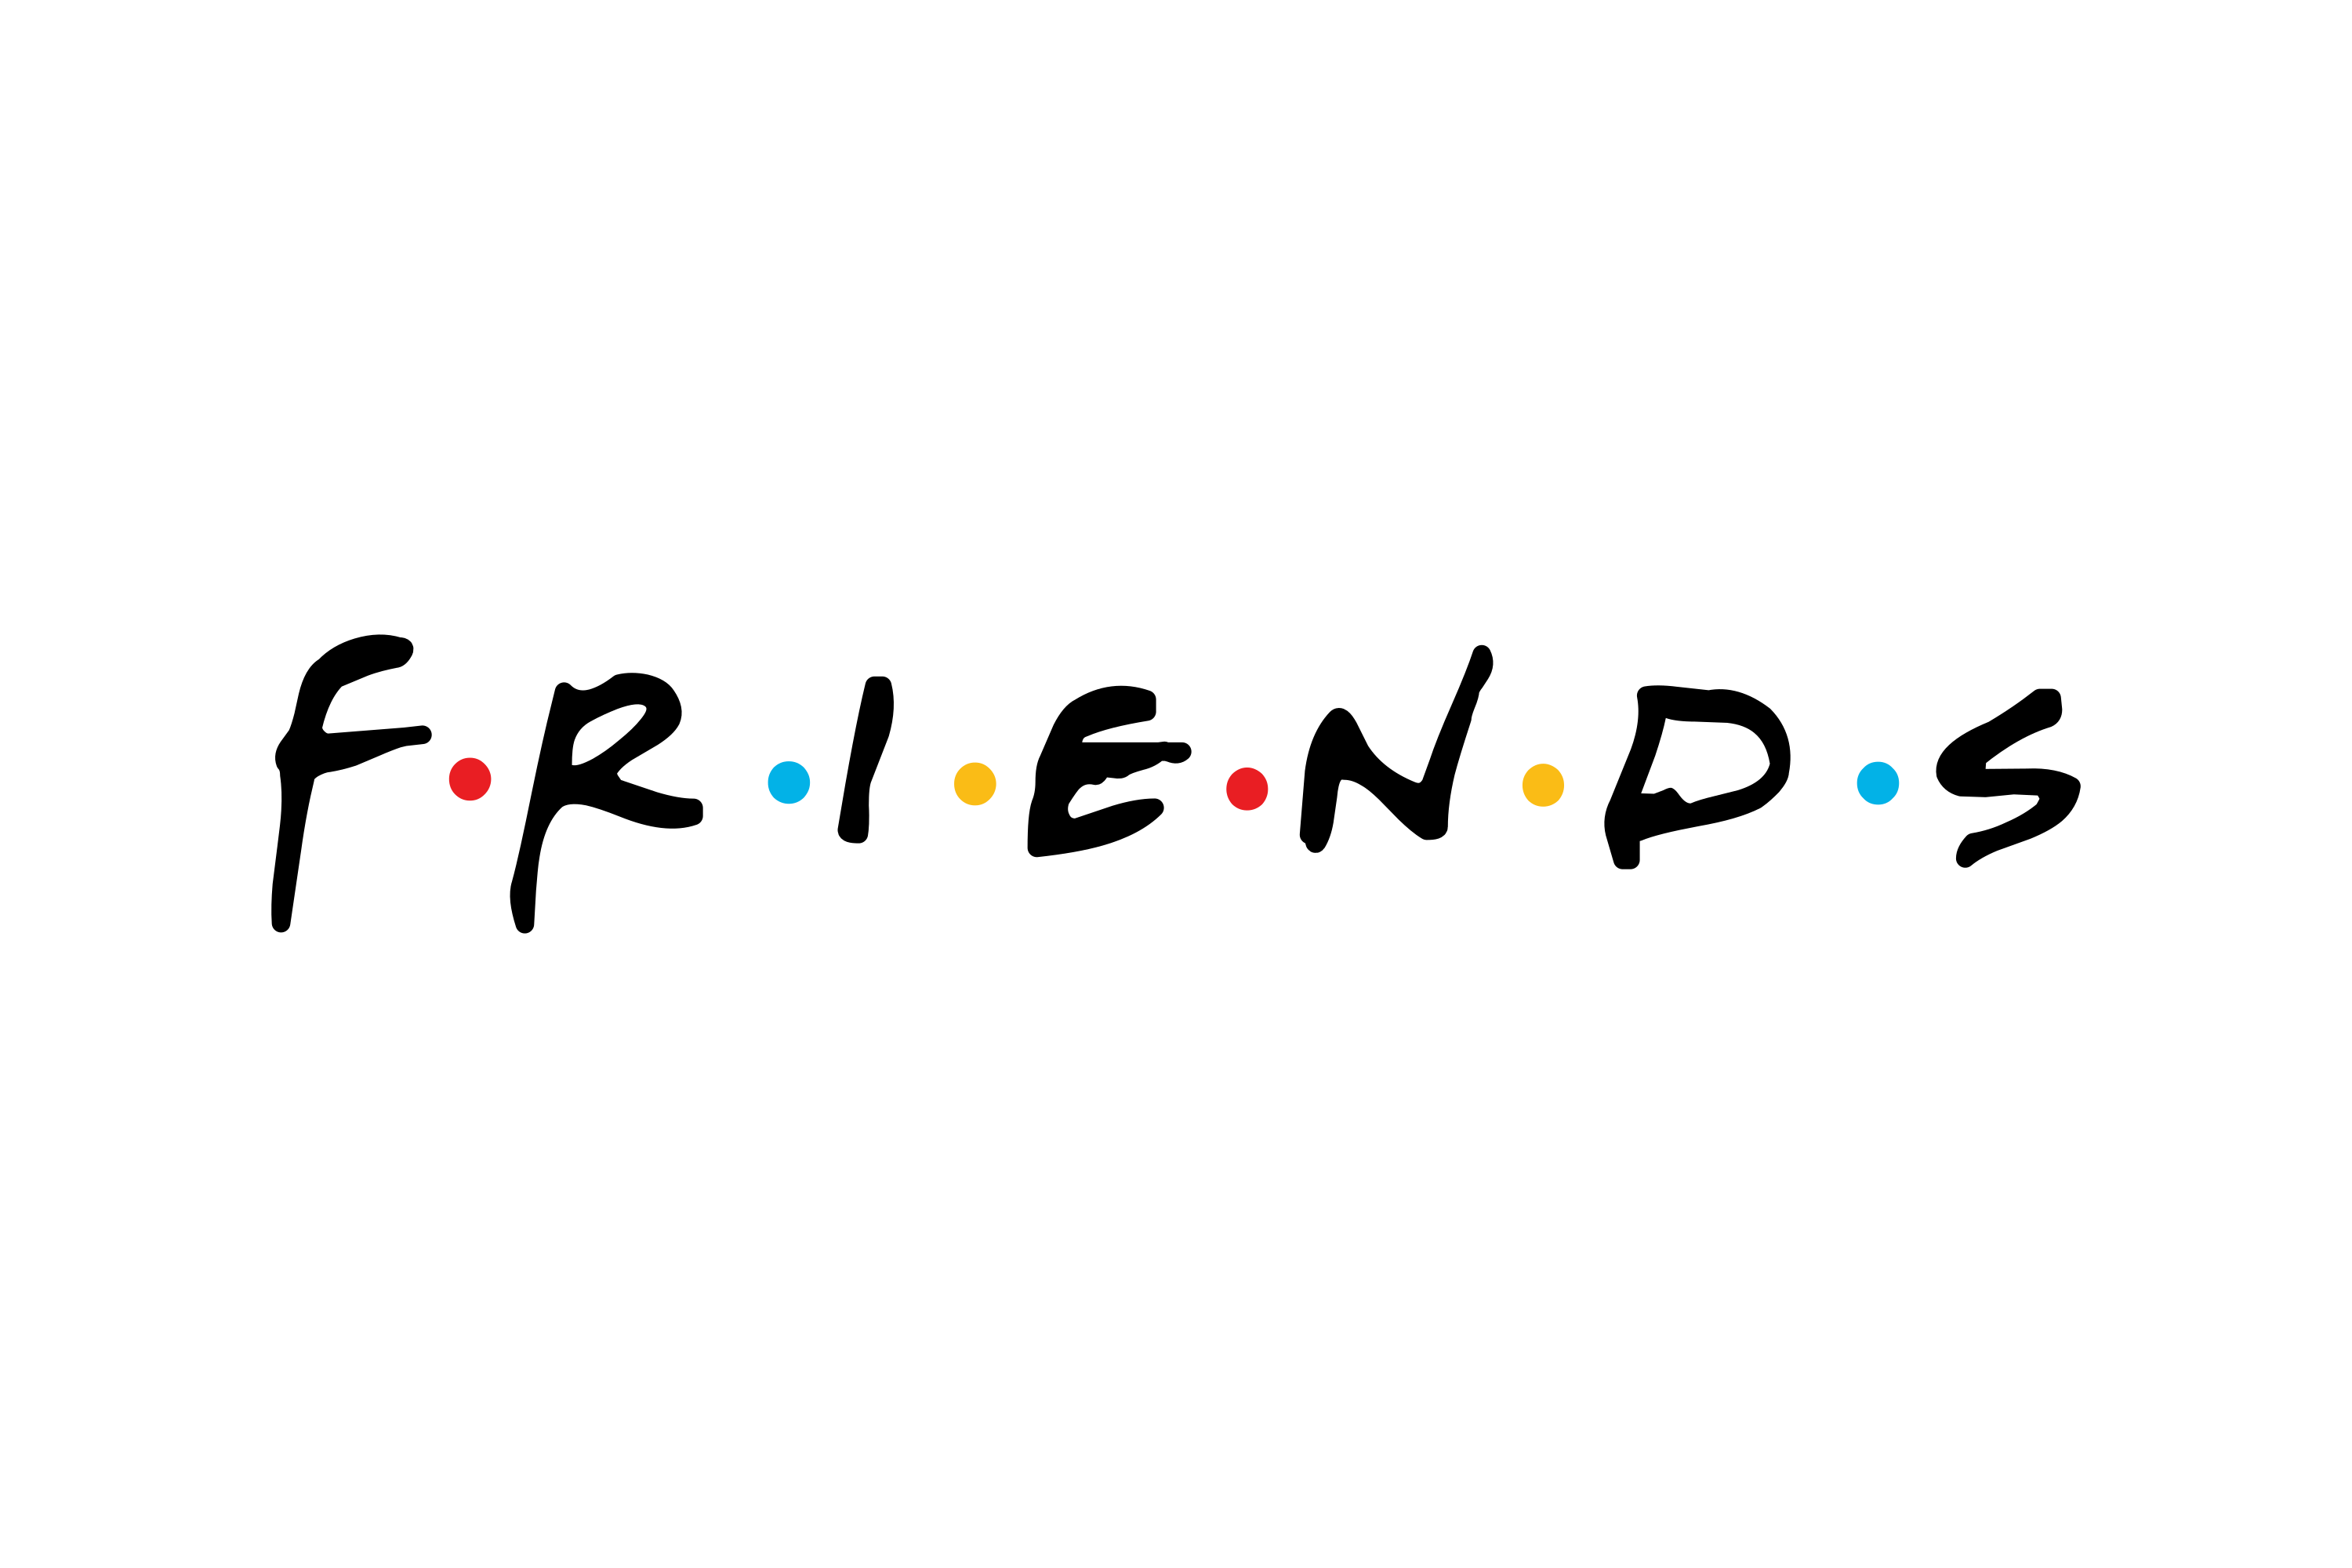 Download Friends Logo in SVG Vector or PNG File Format - Logo.wine